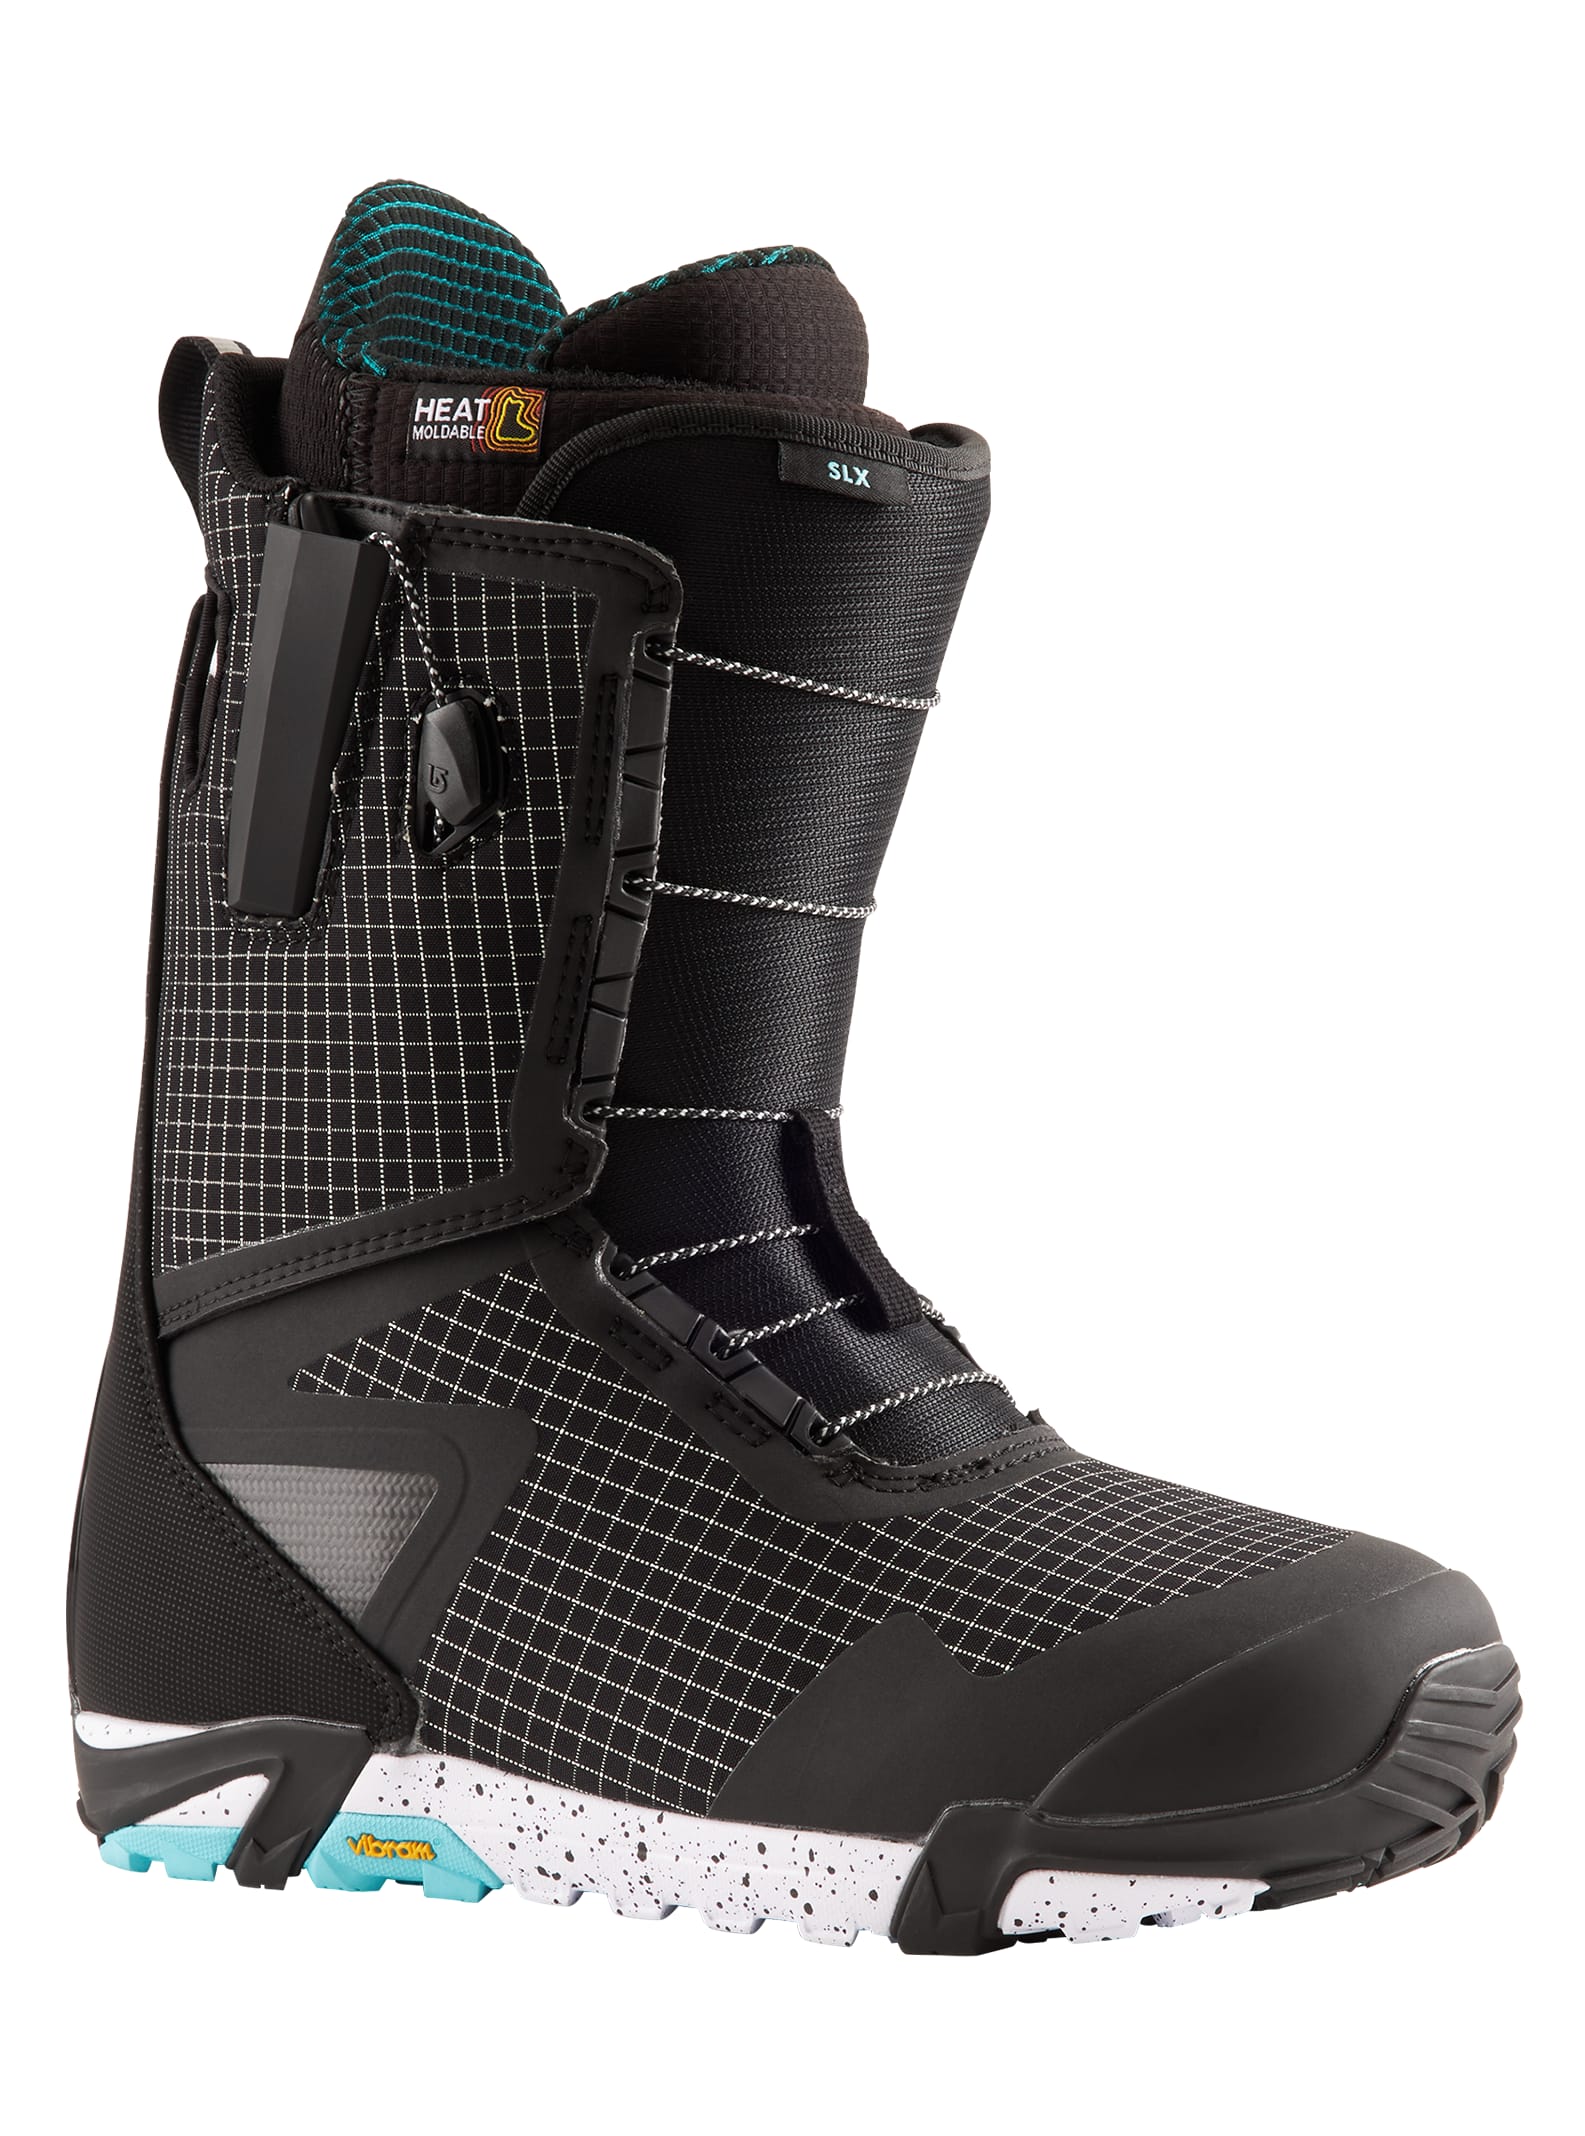 Men's Burton SLX Snowboard Boots | Burton.com Winter 2022 ES